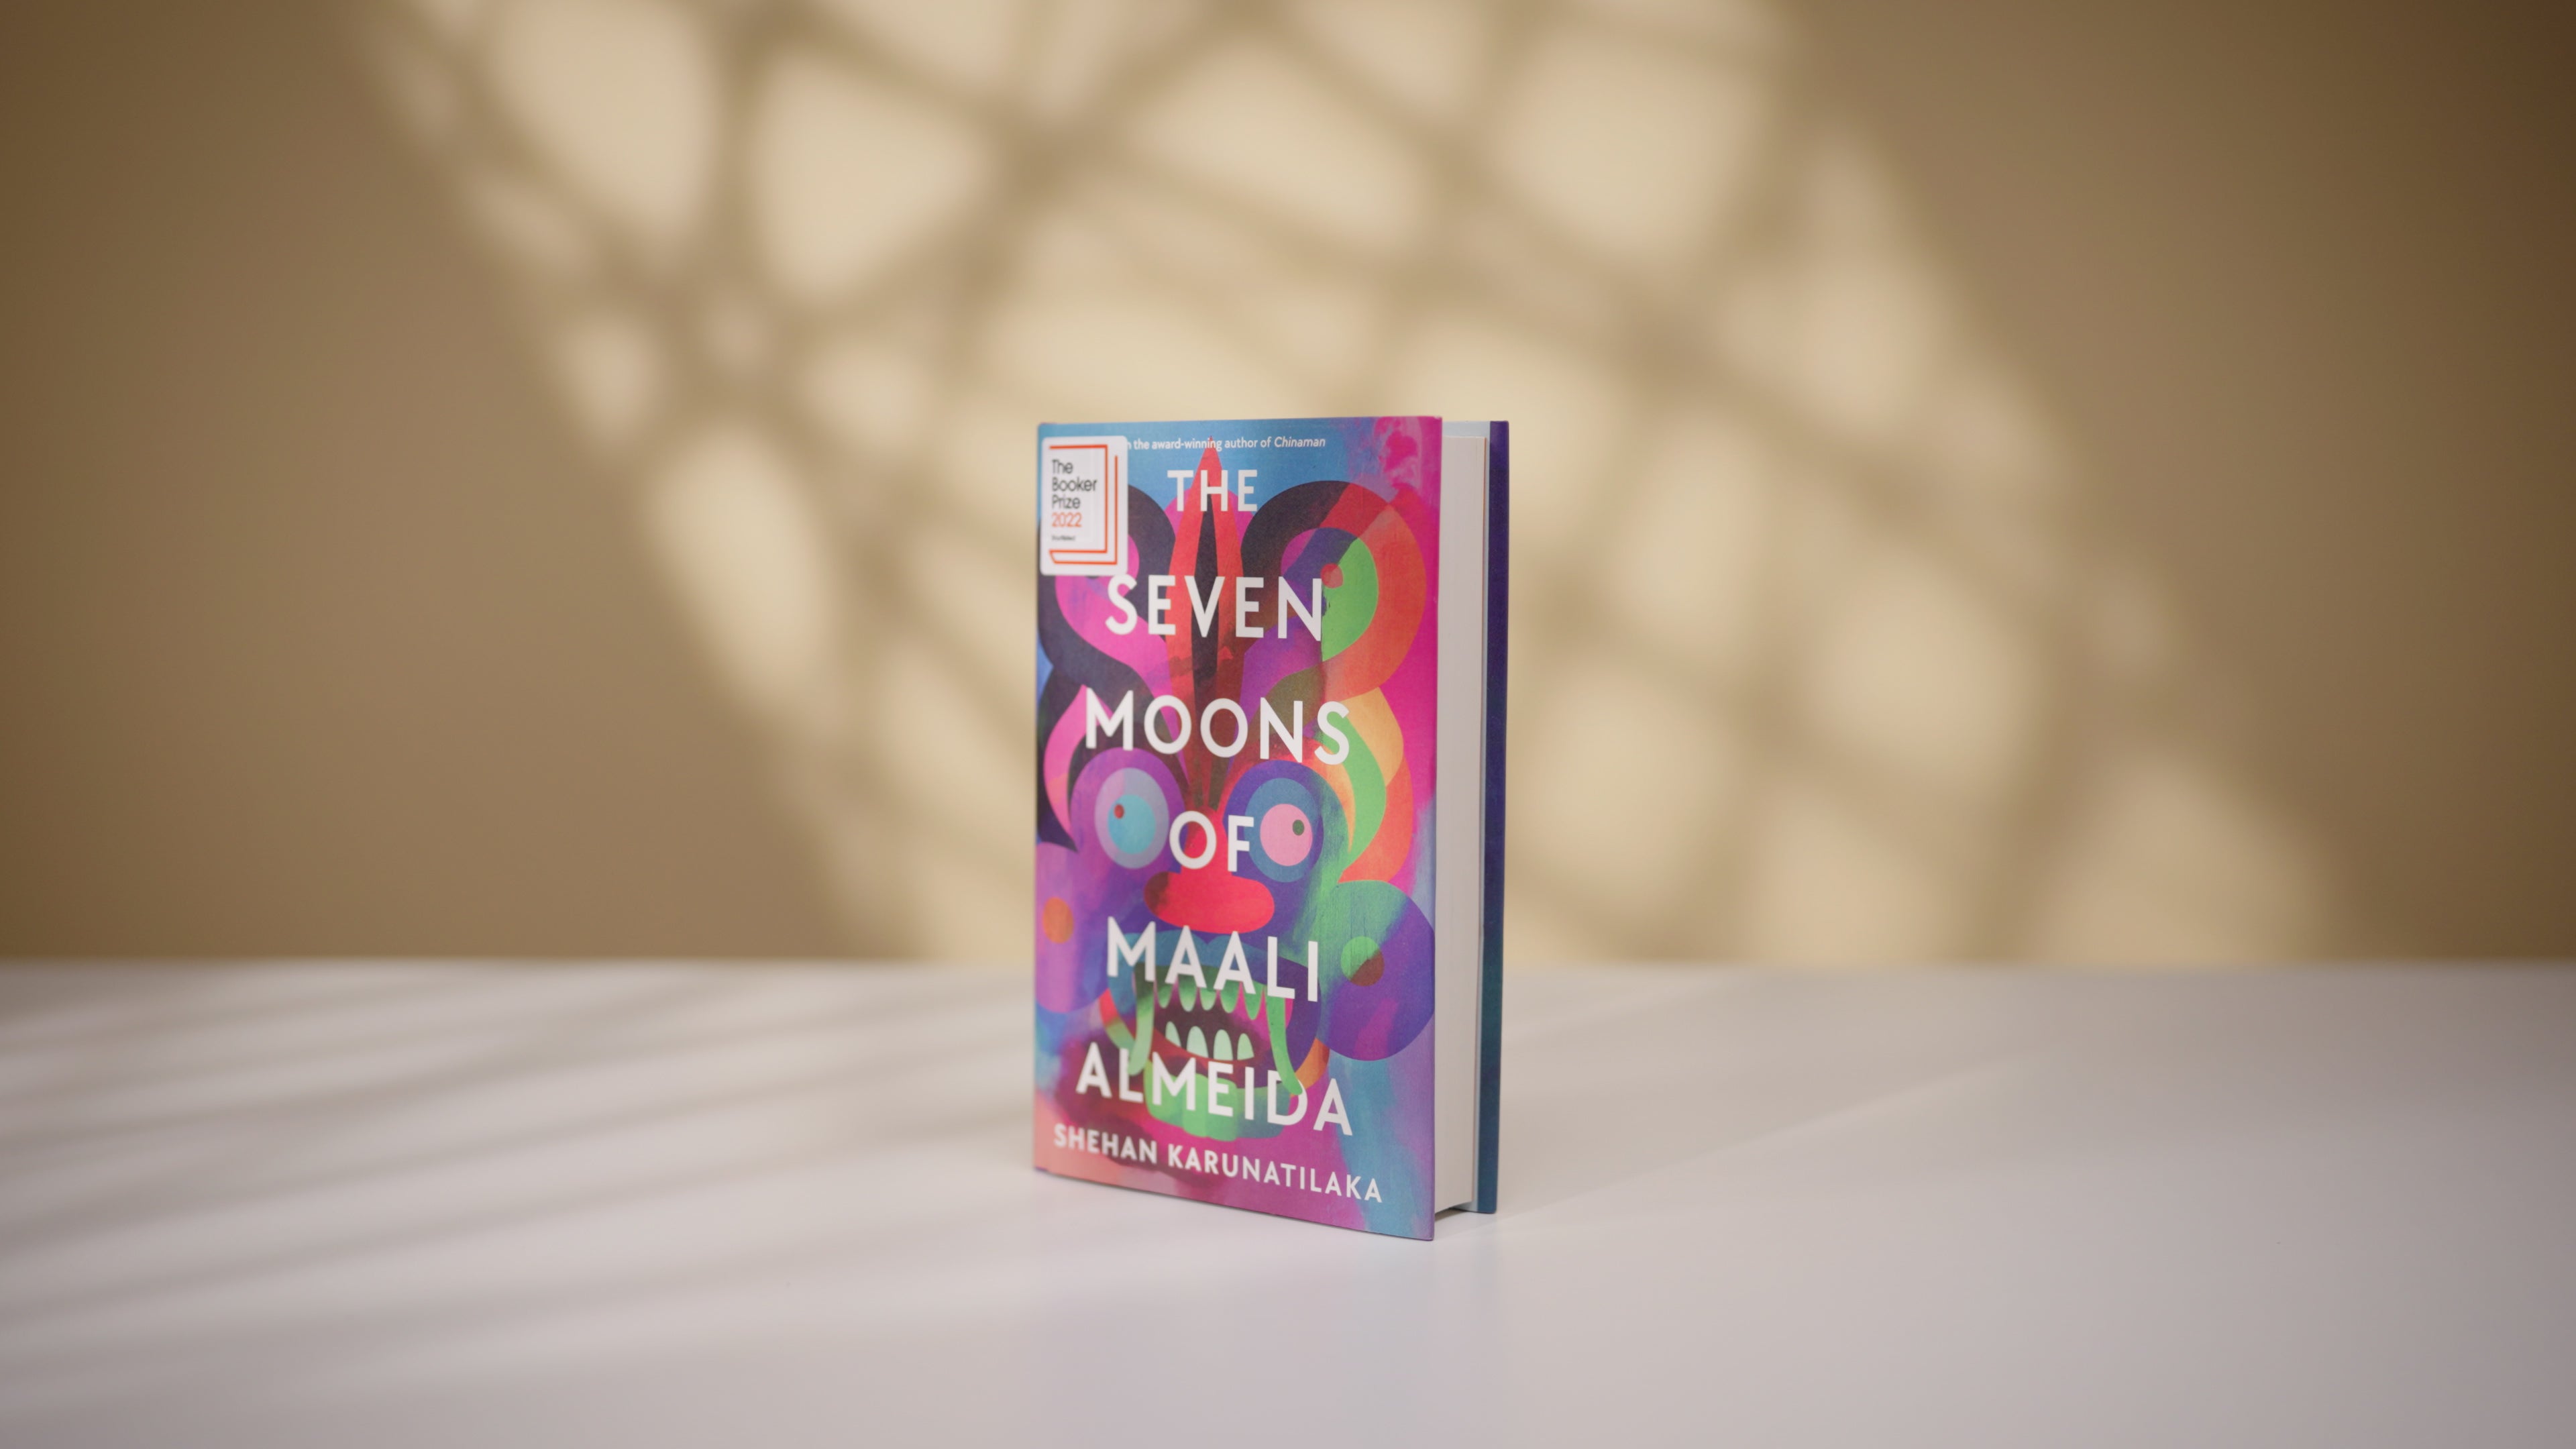 Sri Lankan author Shehan Karunatilaka makes the list with his second novel The Seven Moons of Maali Almeida.